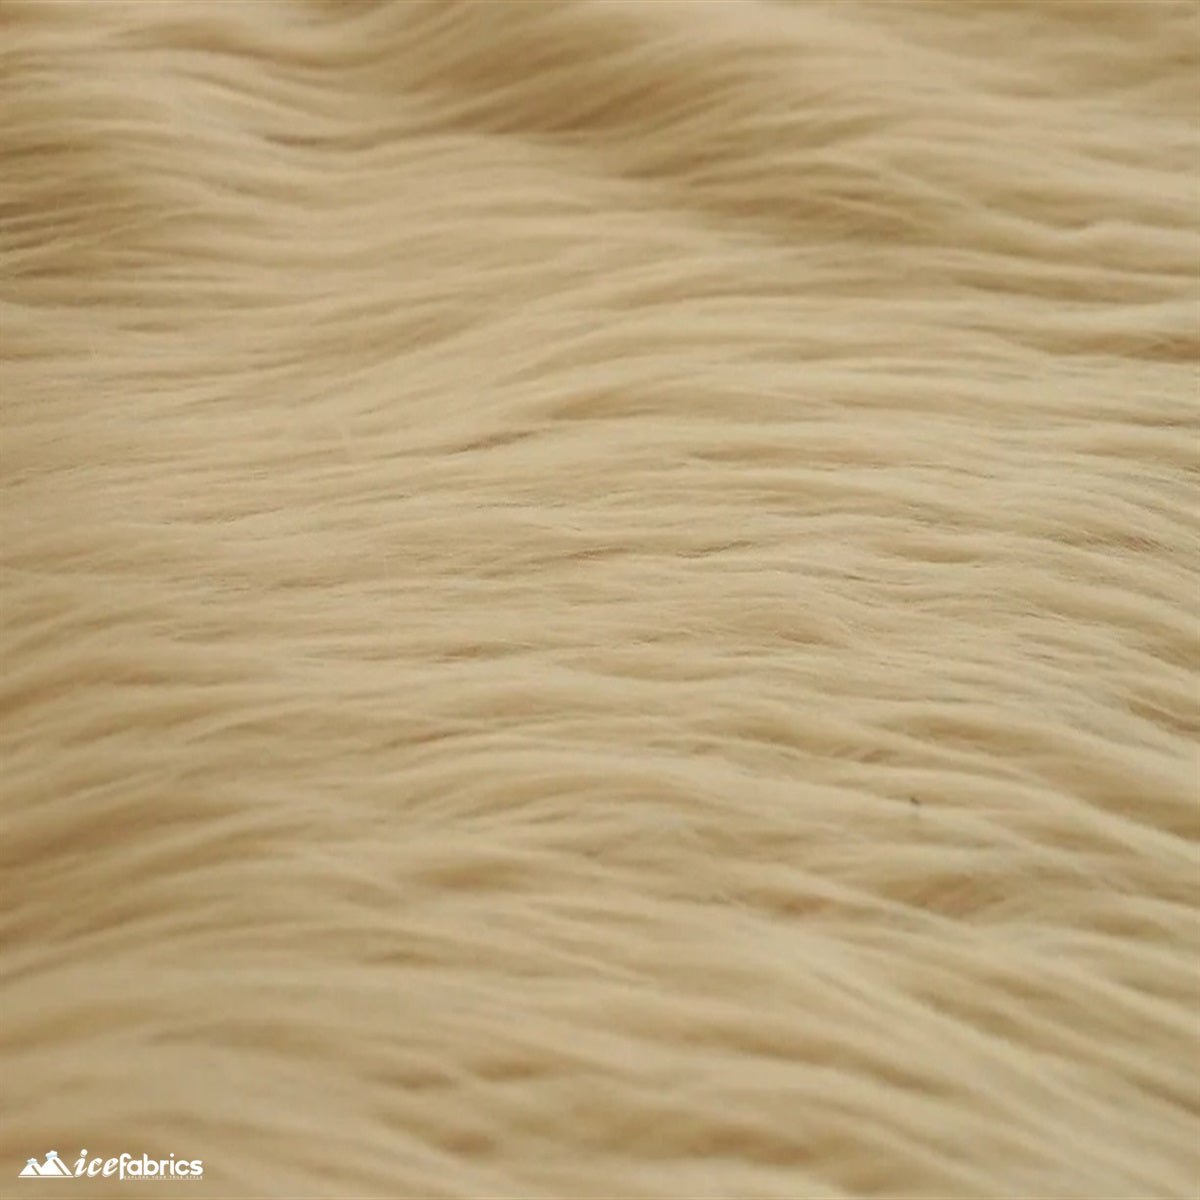 Shaggy Mohair Faux Fur Fabric/ 4 Inches Long PileICE FABRICSICE FABRICSIvory1/2 Yard (60 inches Wide)Shaggy Mohair Faux Fur Fabric/ 4 Inches Long Pile ICE FABRICS